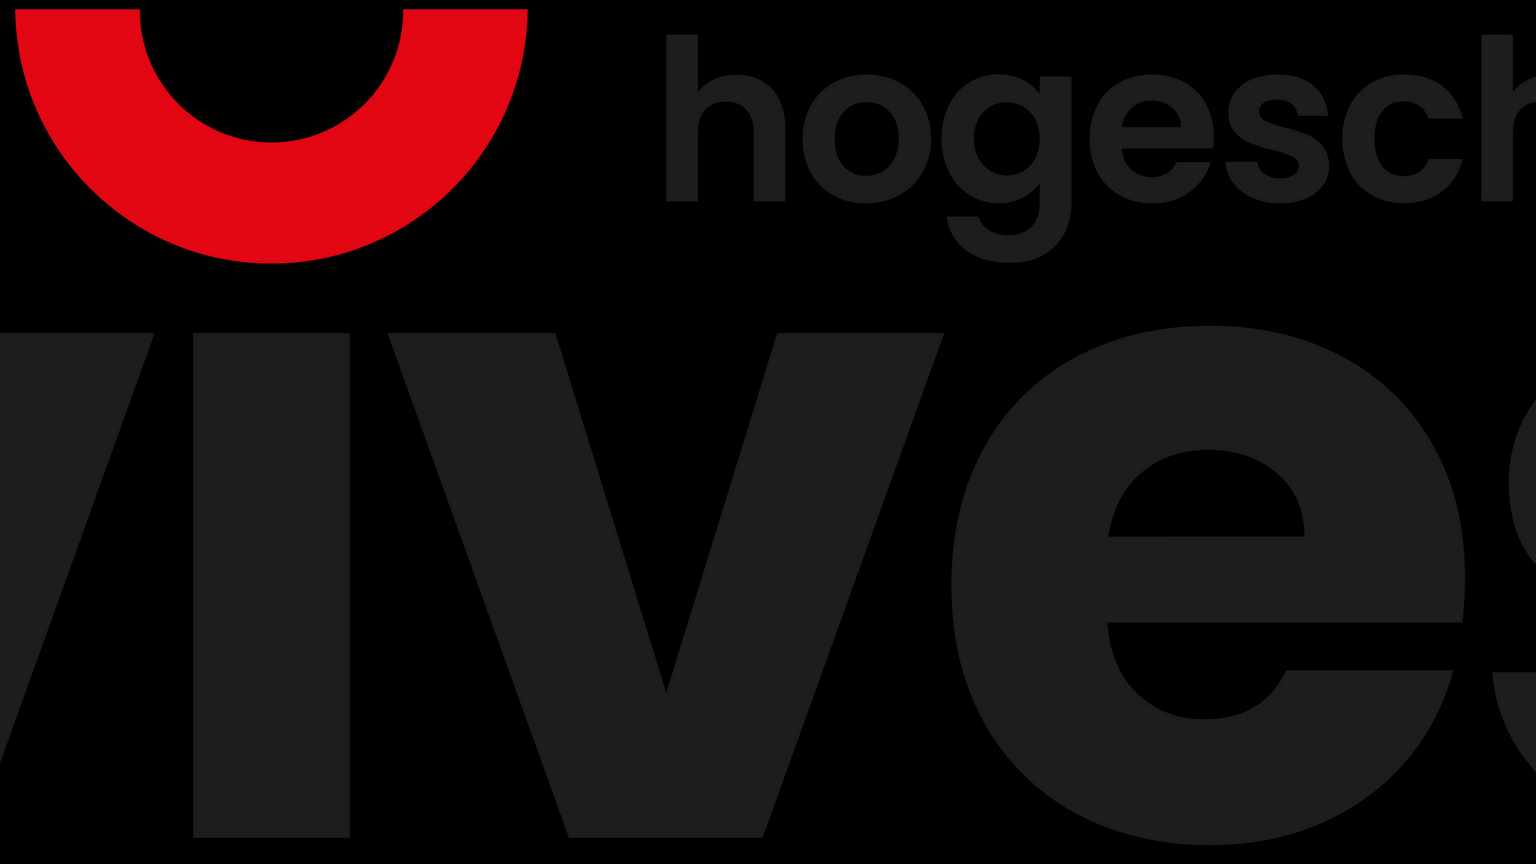 VIVES Hogeschool